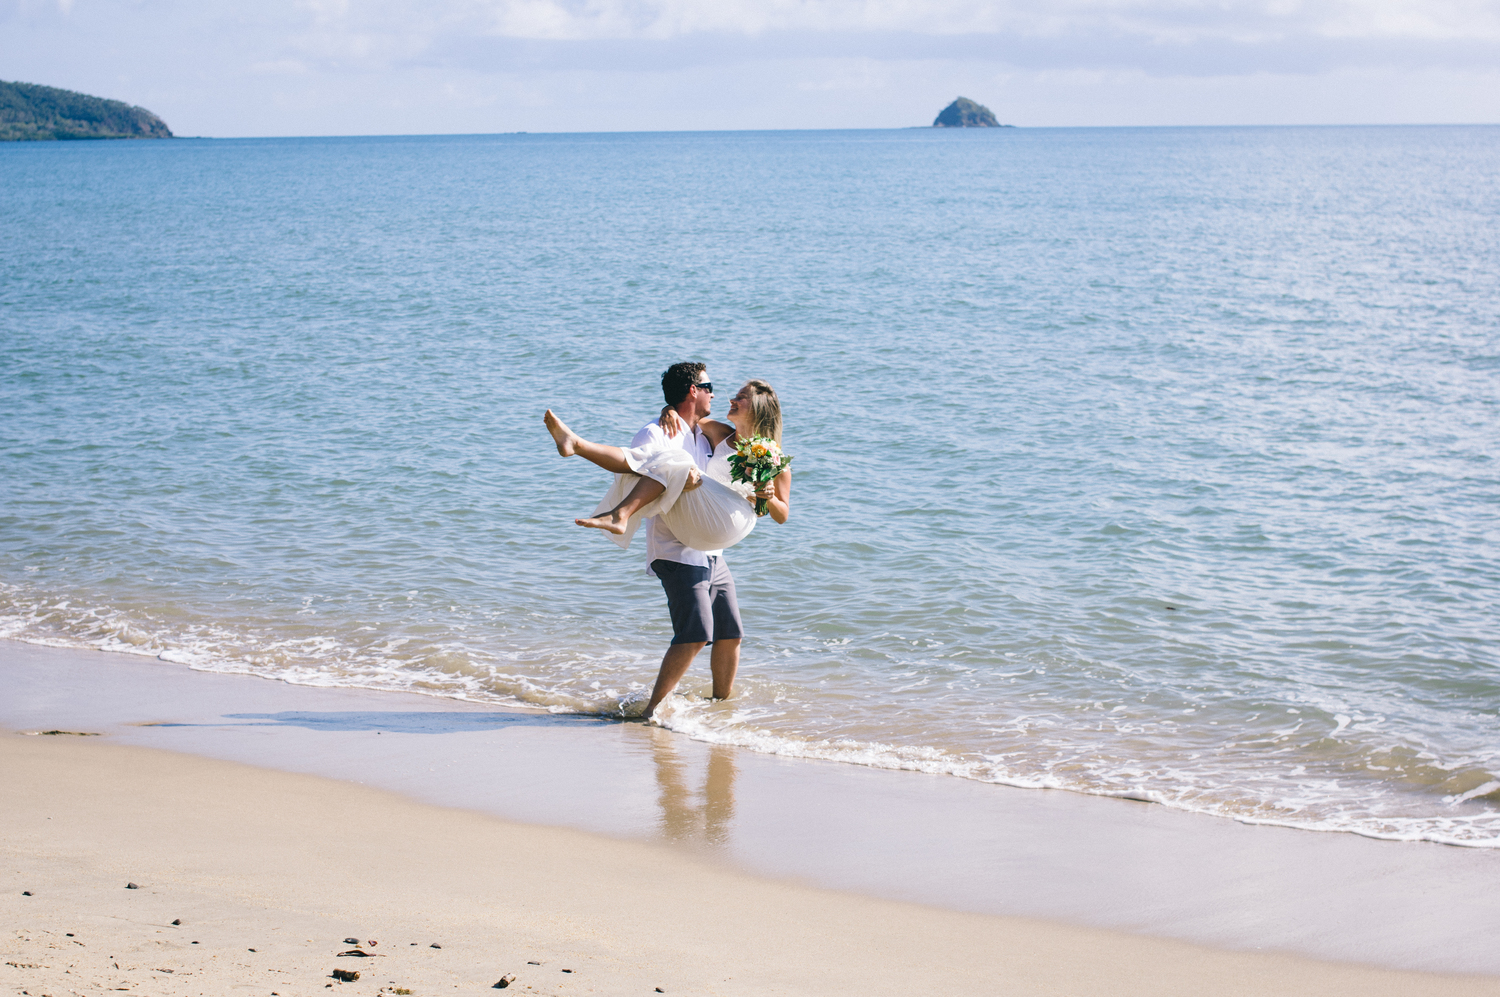 Craig + Ines analogue Queensland beach elopement